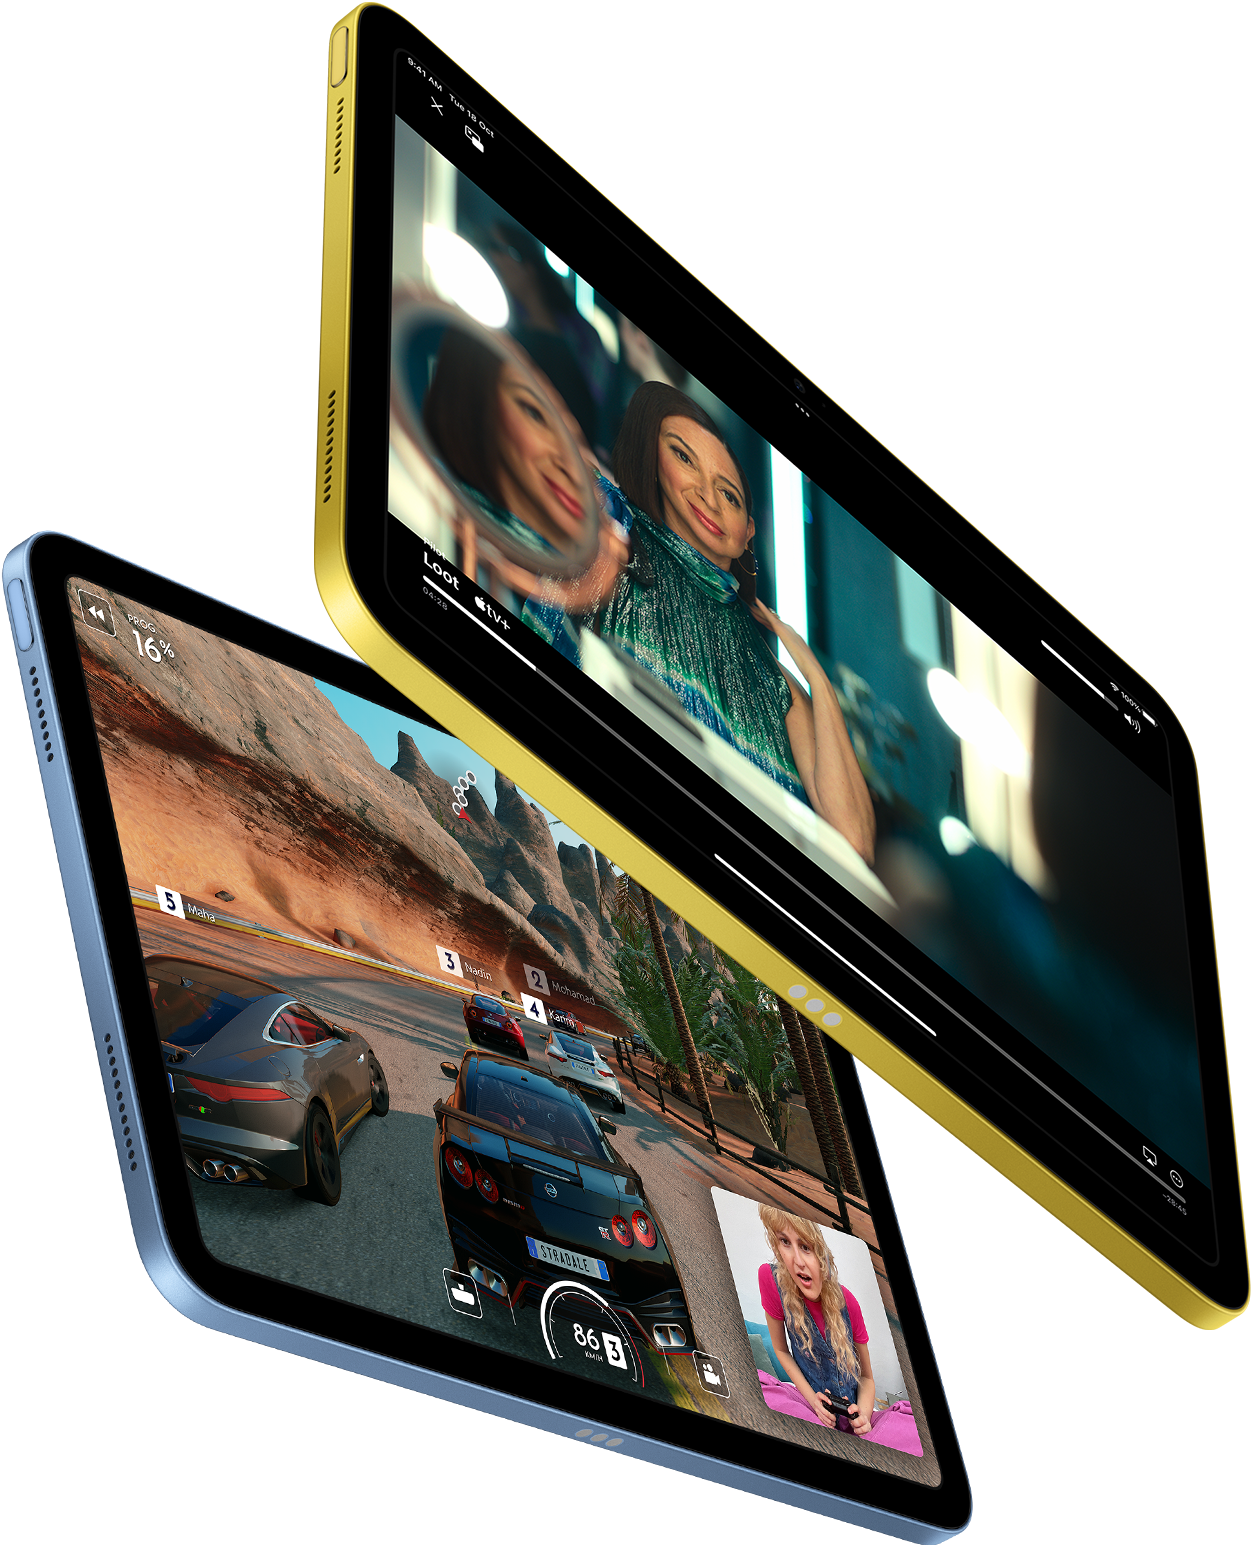 Showcasing Apple TV+ and shareplay gaming experience on iPad.